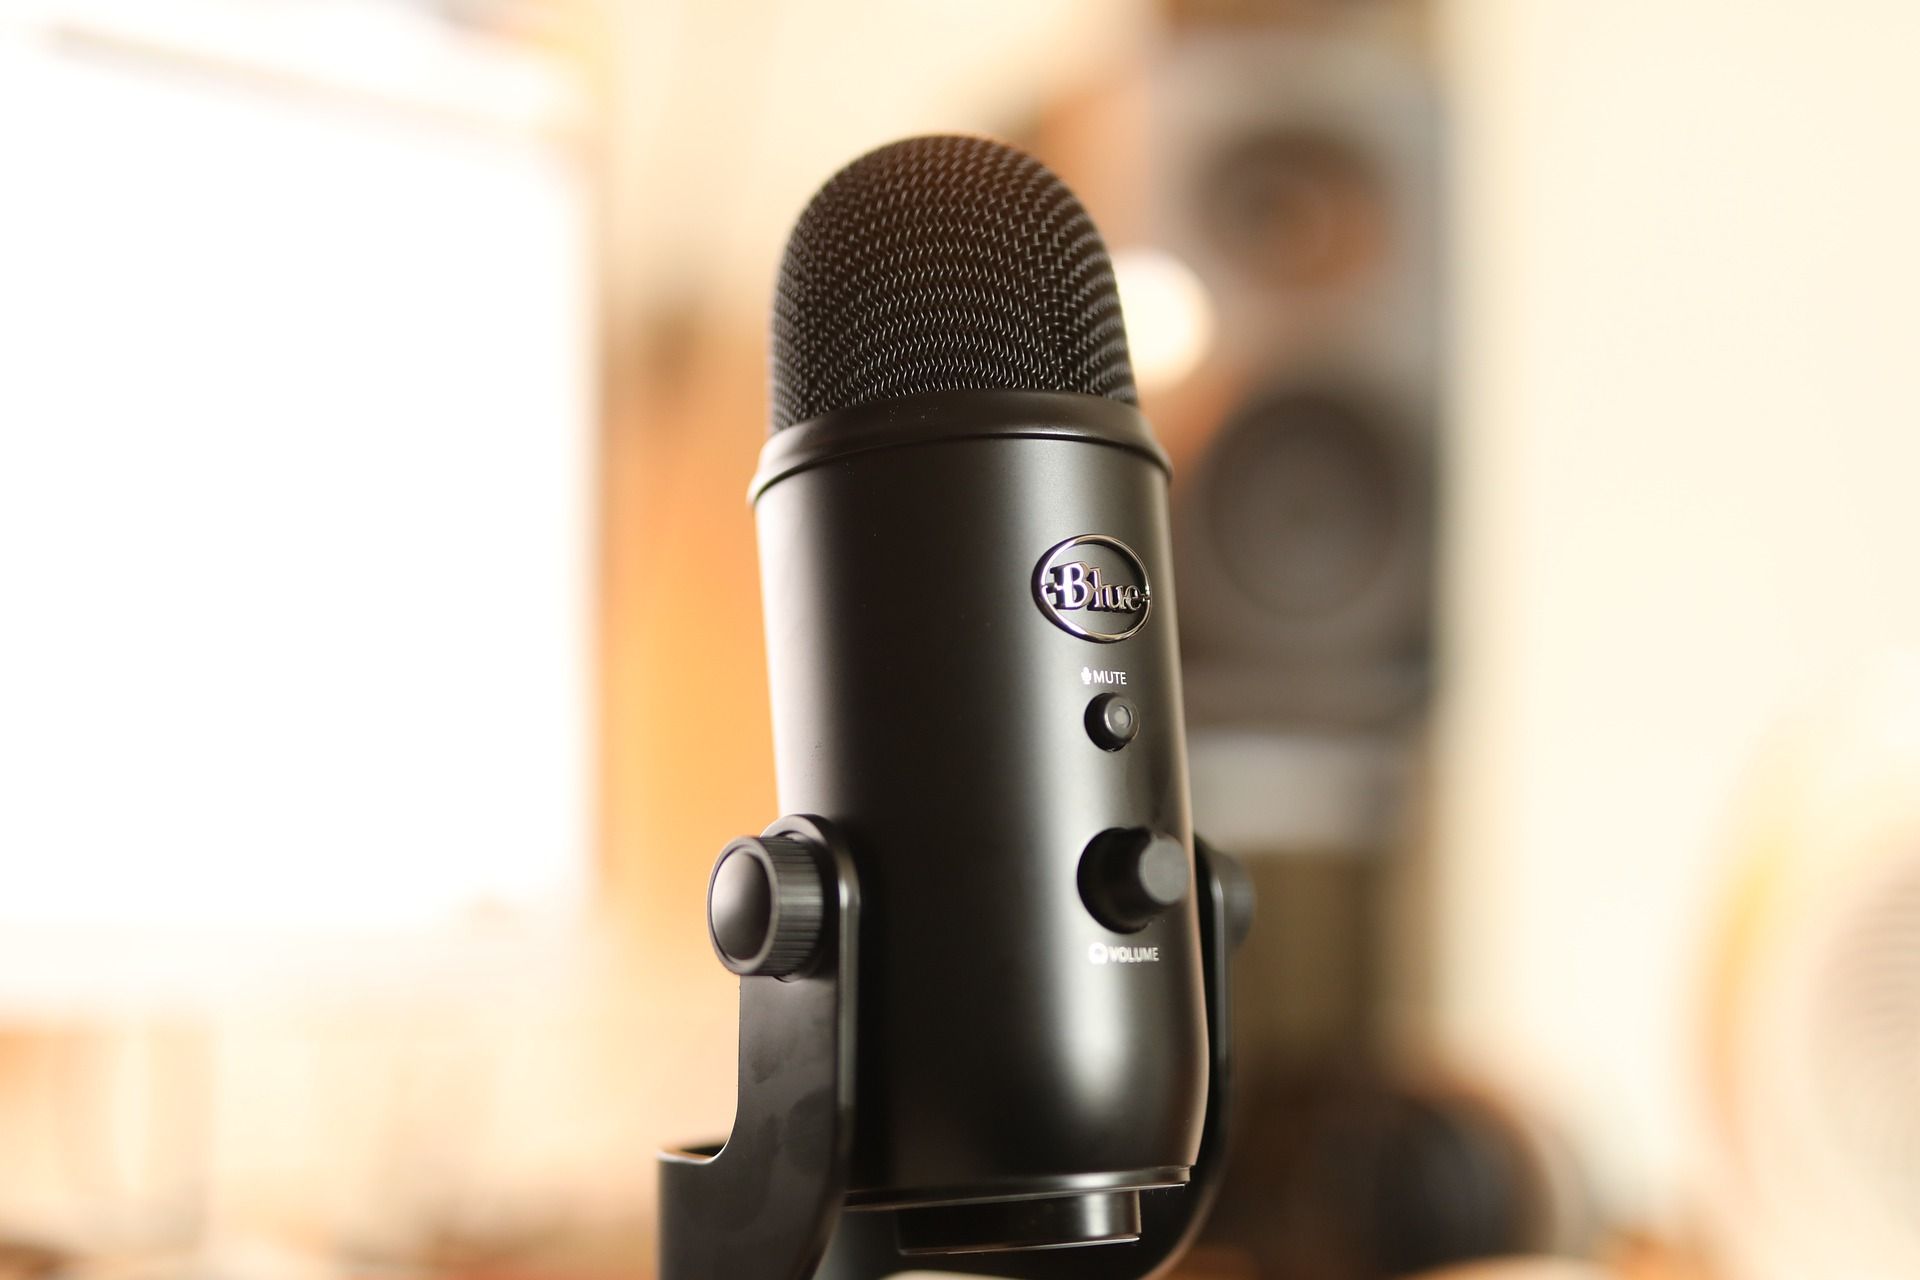 black blue yeti microphone against blurred background